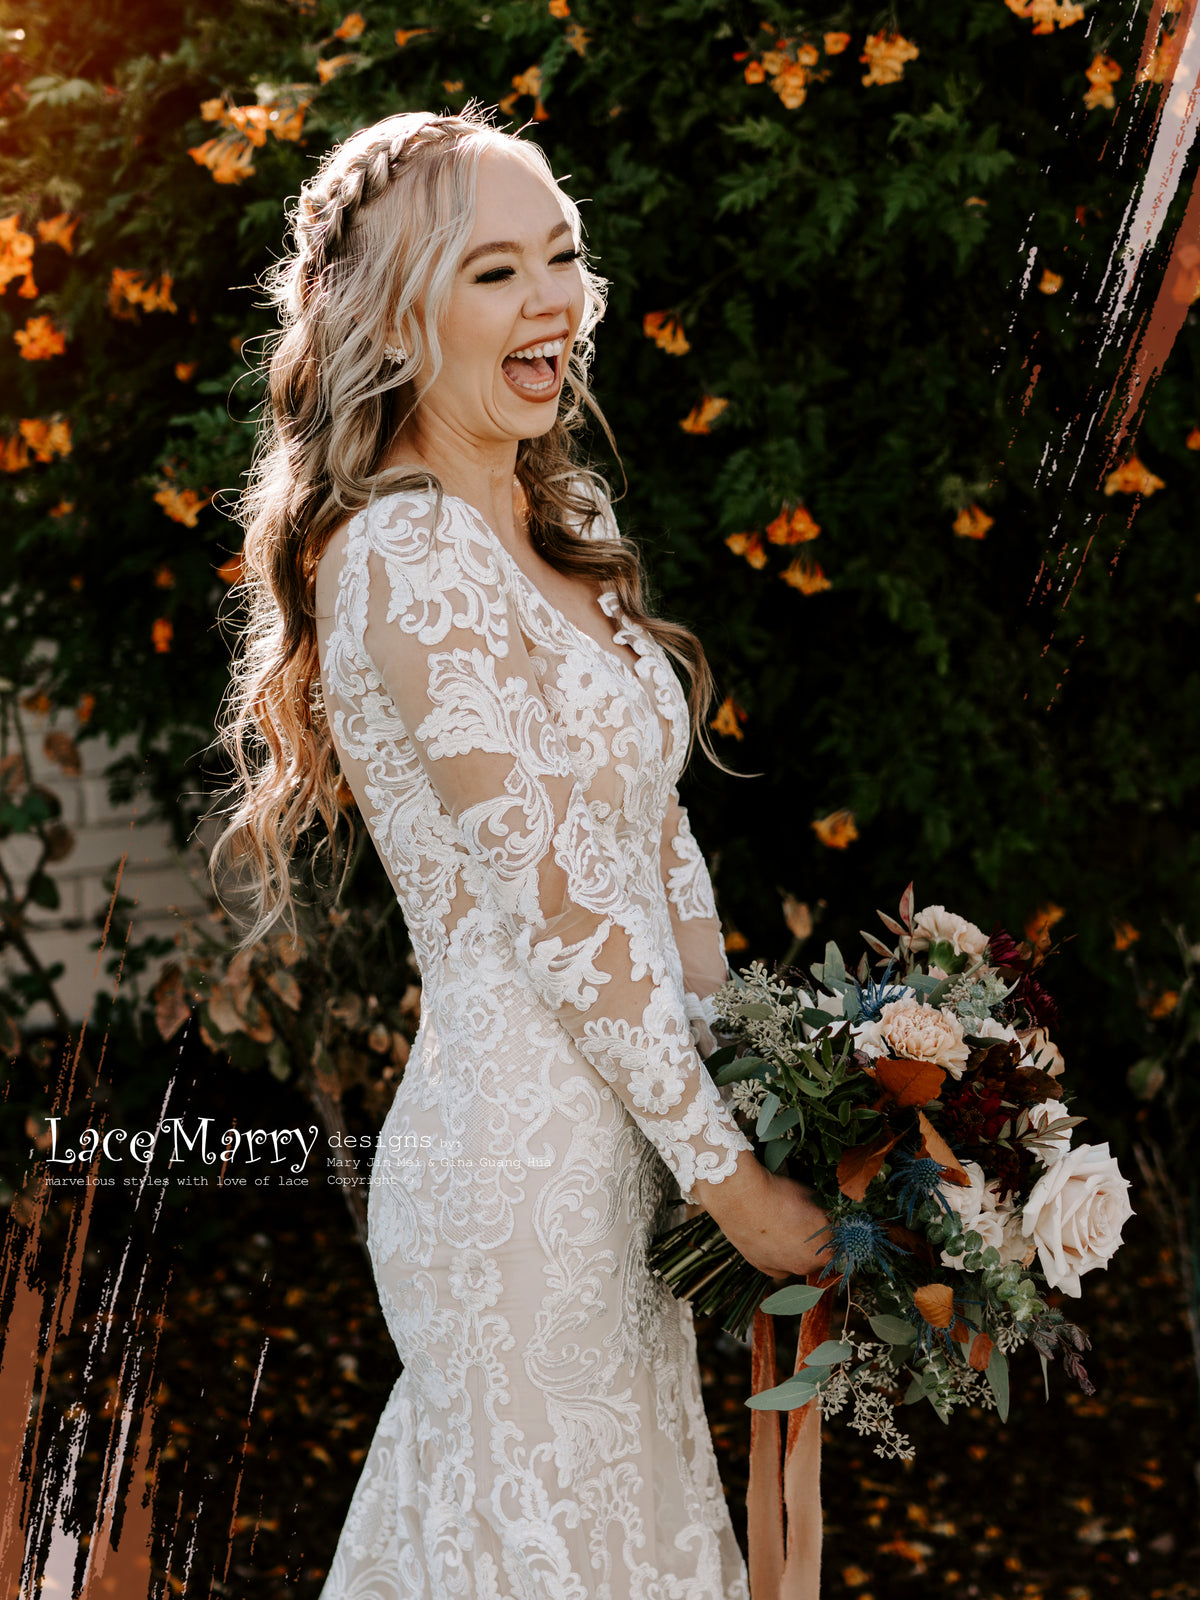 Amazing Lace Wedding Dress - LaceMarry